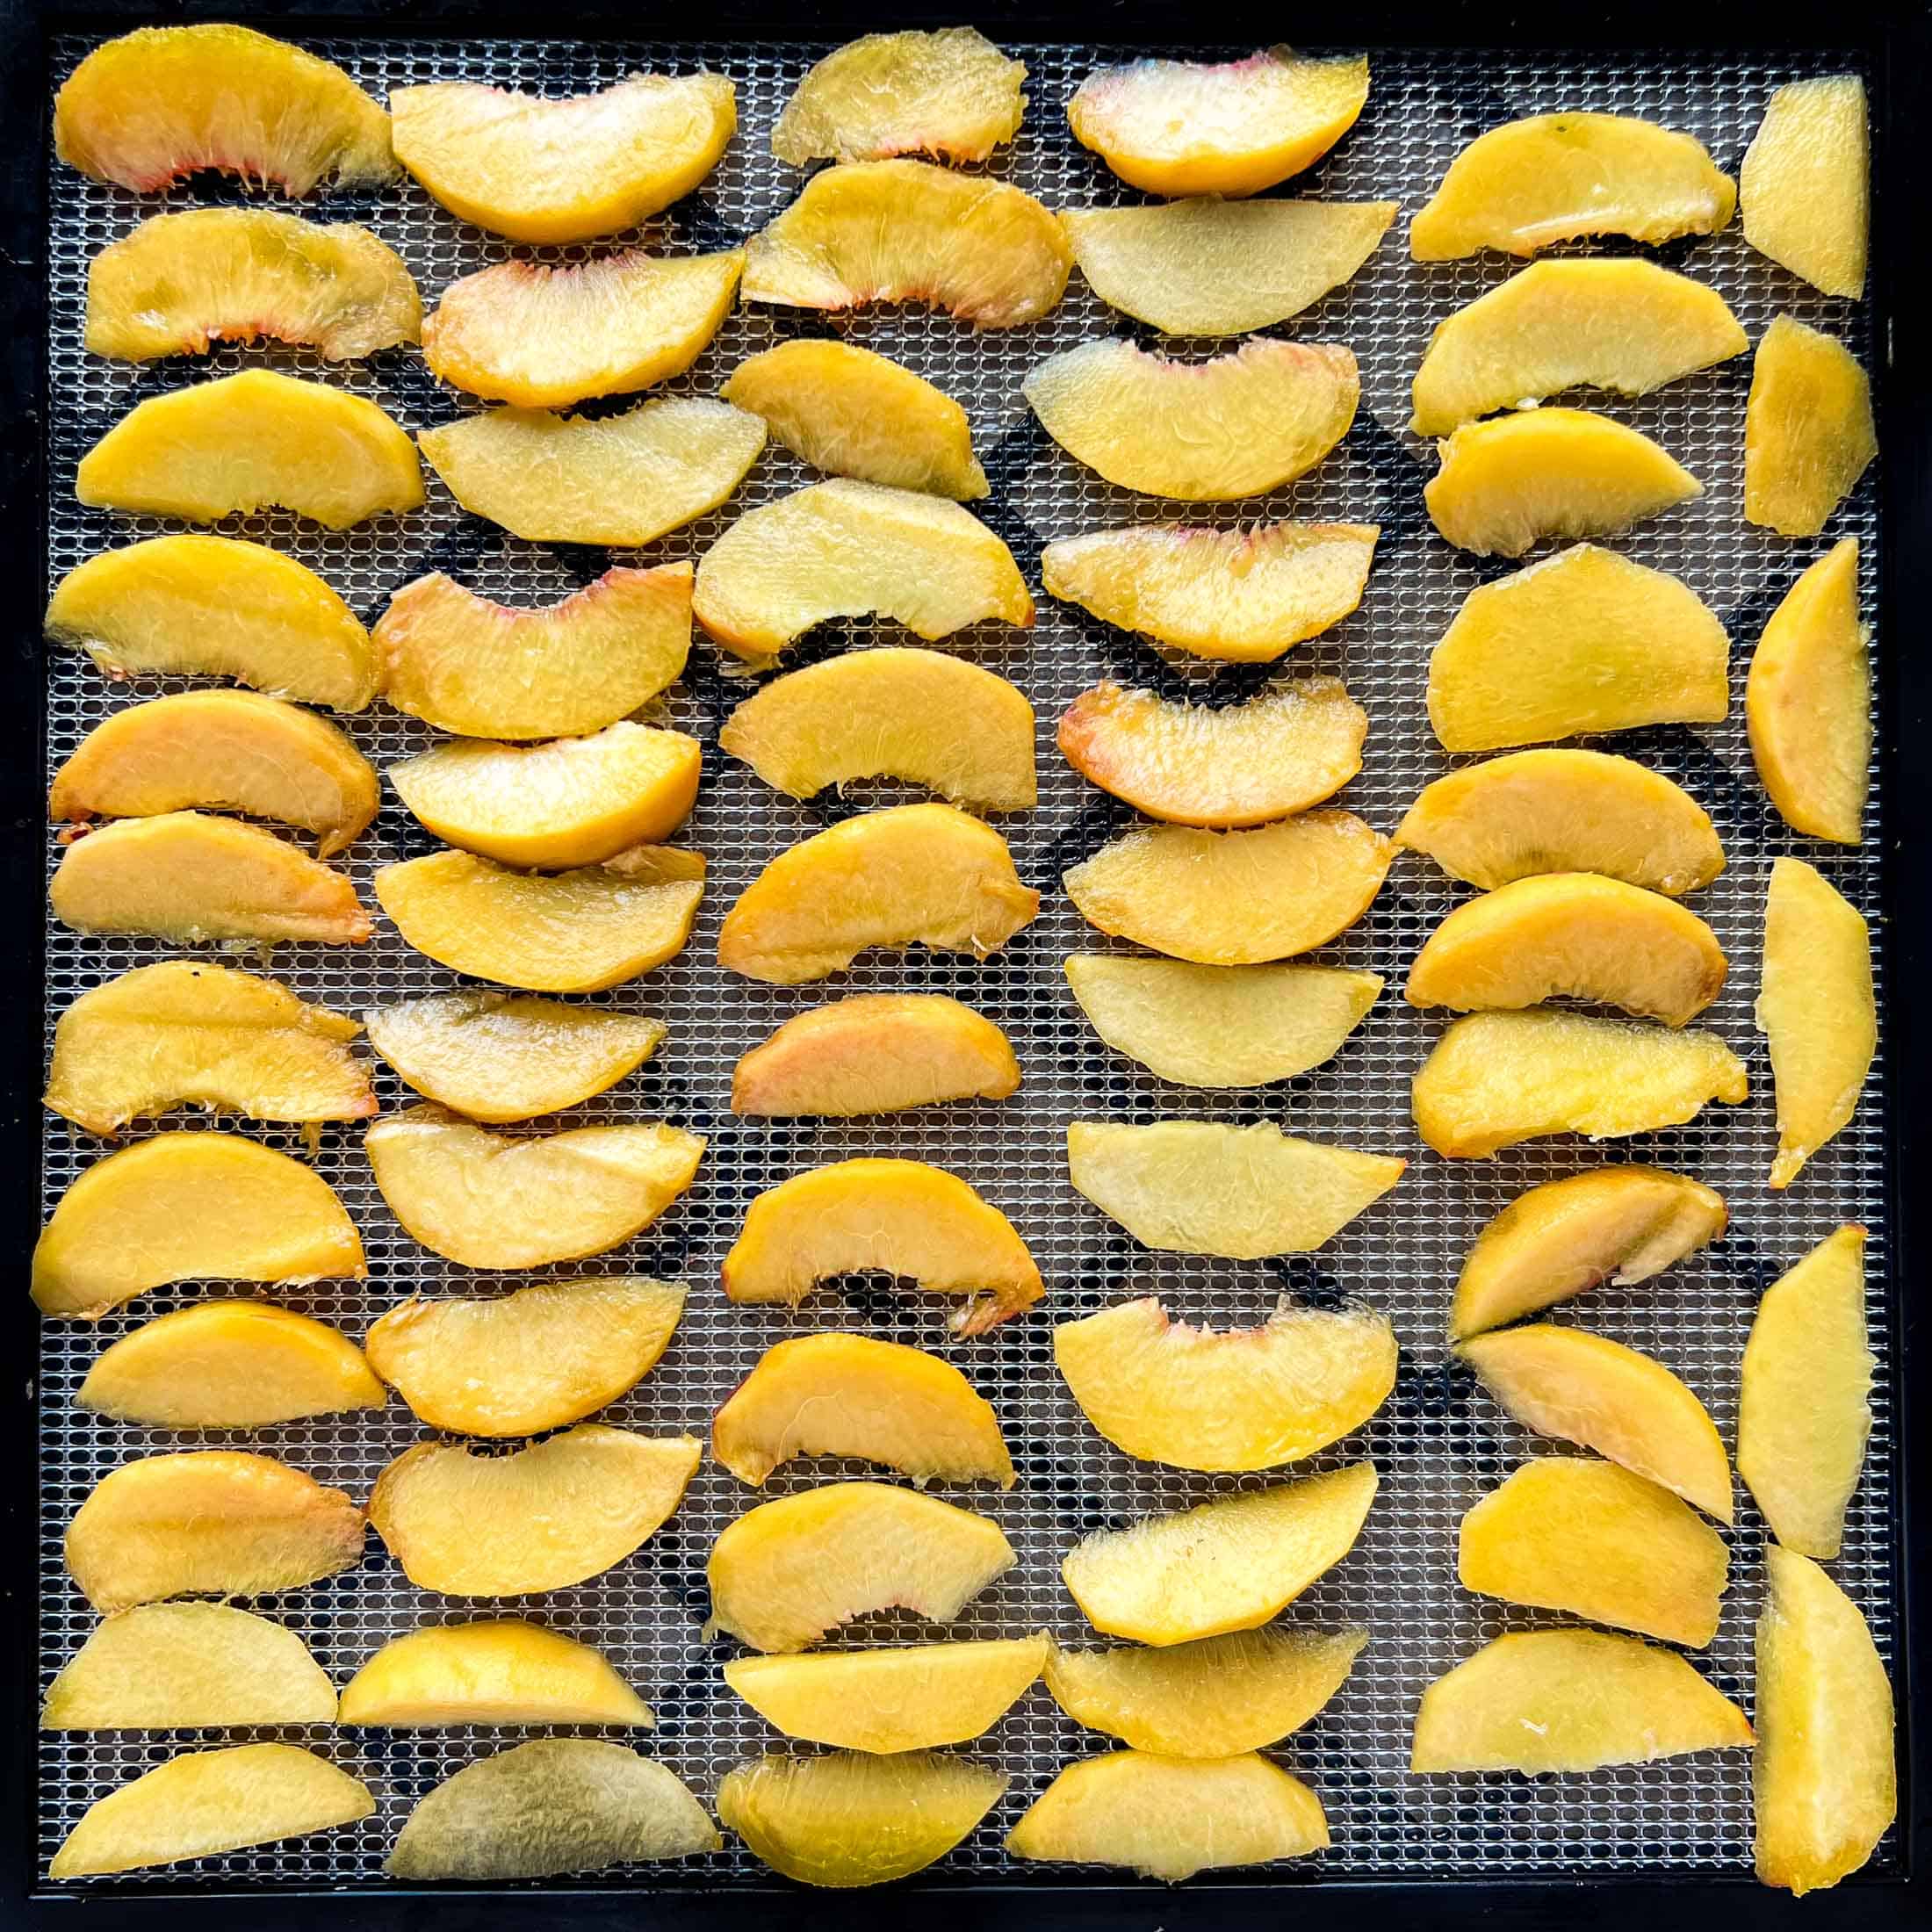 Fresh sliced peaches on a dehydrator tray.